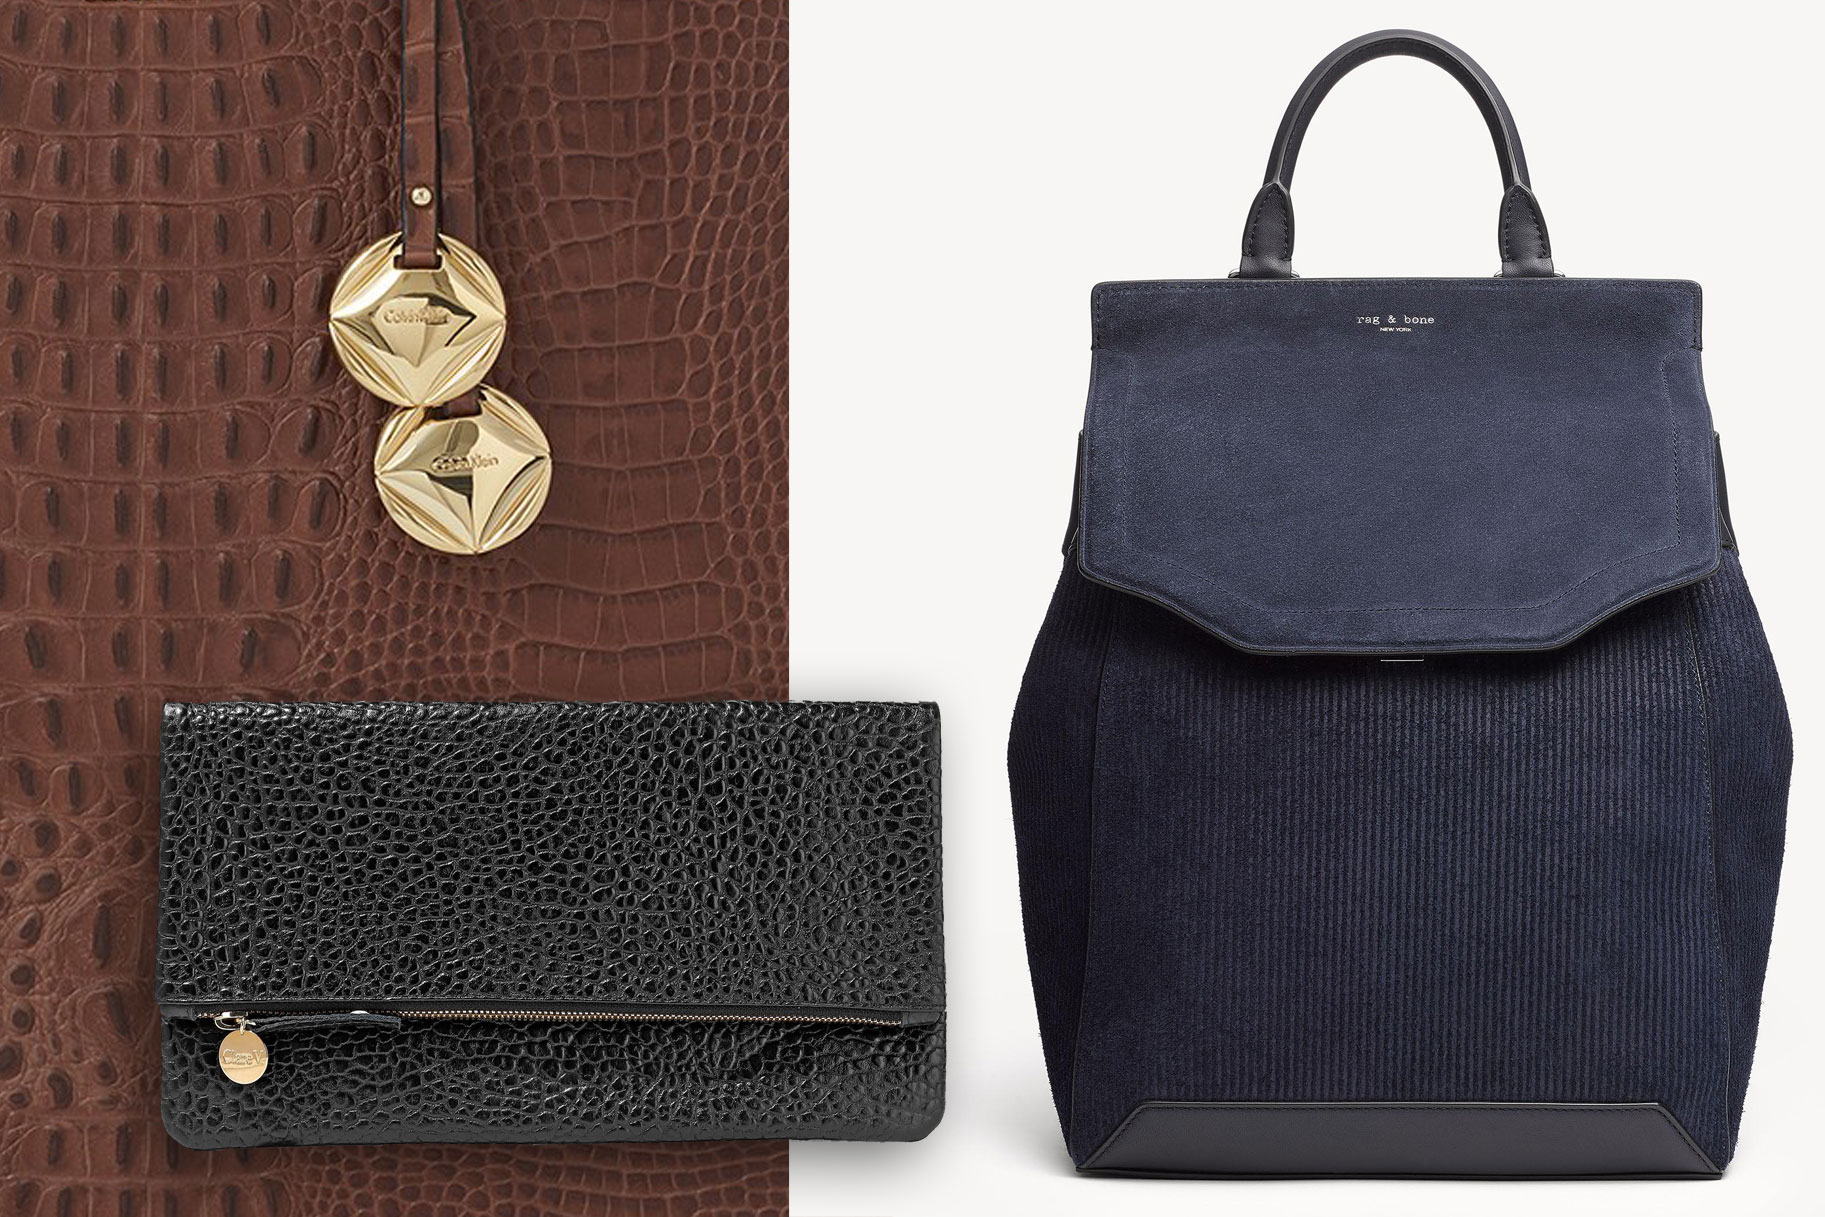 Shop Discounted Designer Bags: Marc Jacobs, Alexander Wang